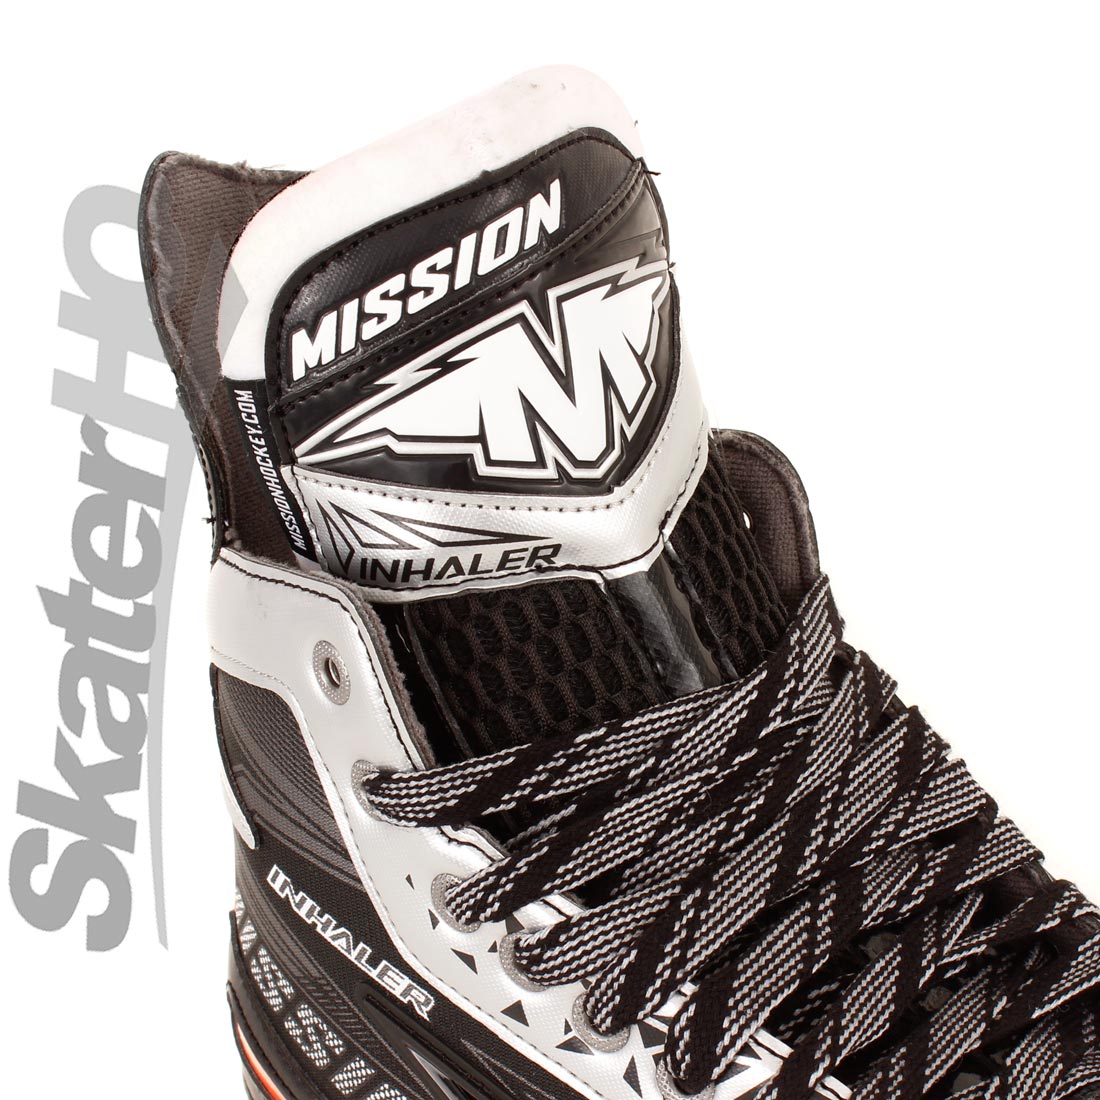 Mission Inhaler NLS3 Skate - 7US Inline Hockey Skates